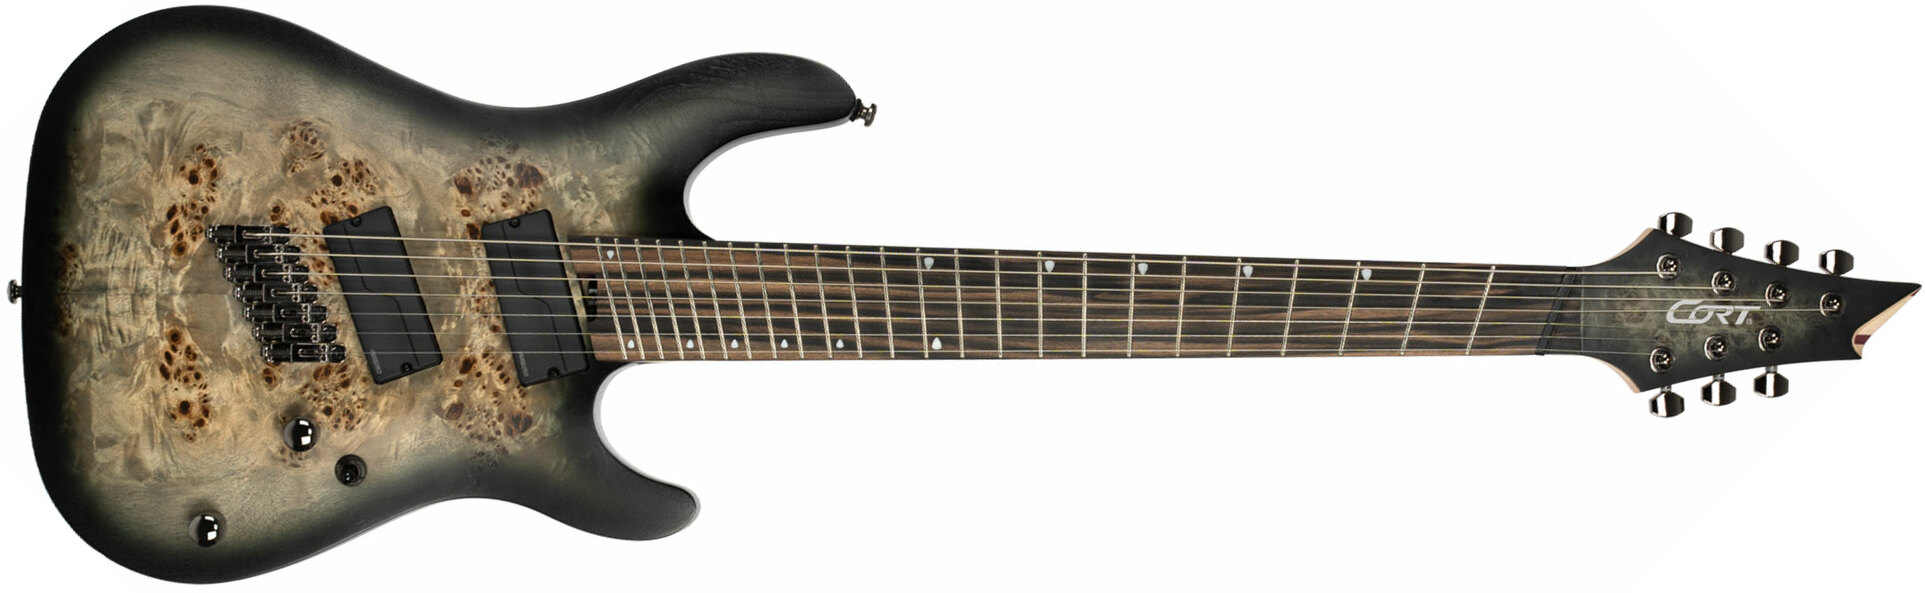 Cort Kx507 Multiscale 7c 2h Fishman Fluence Ht Eb - Star Dust Black - Multi-scale gitaar - Main picture